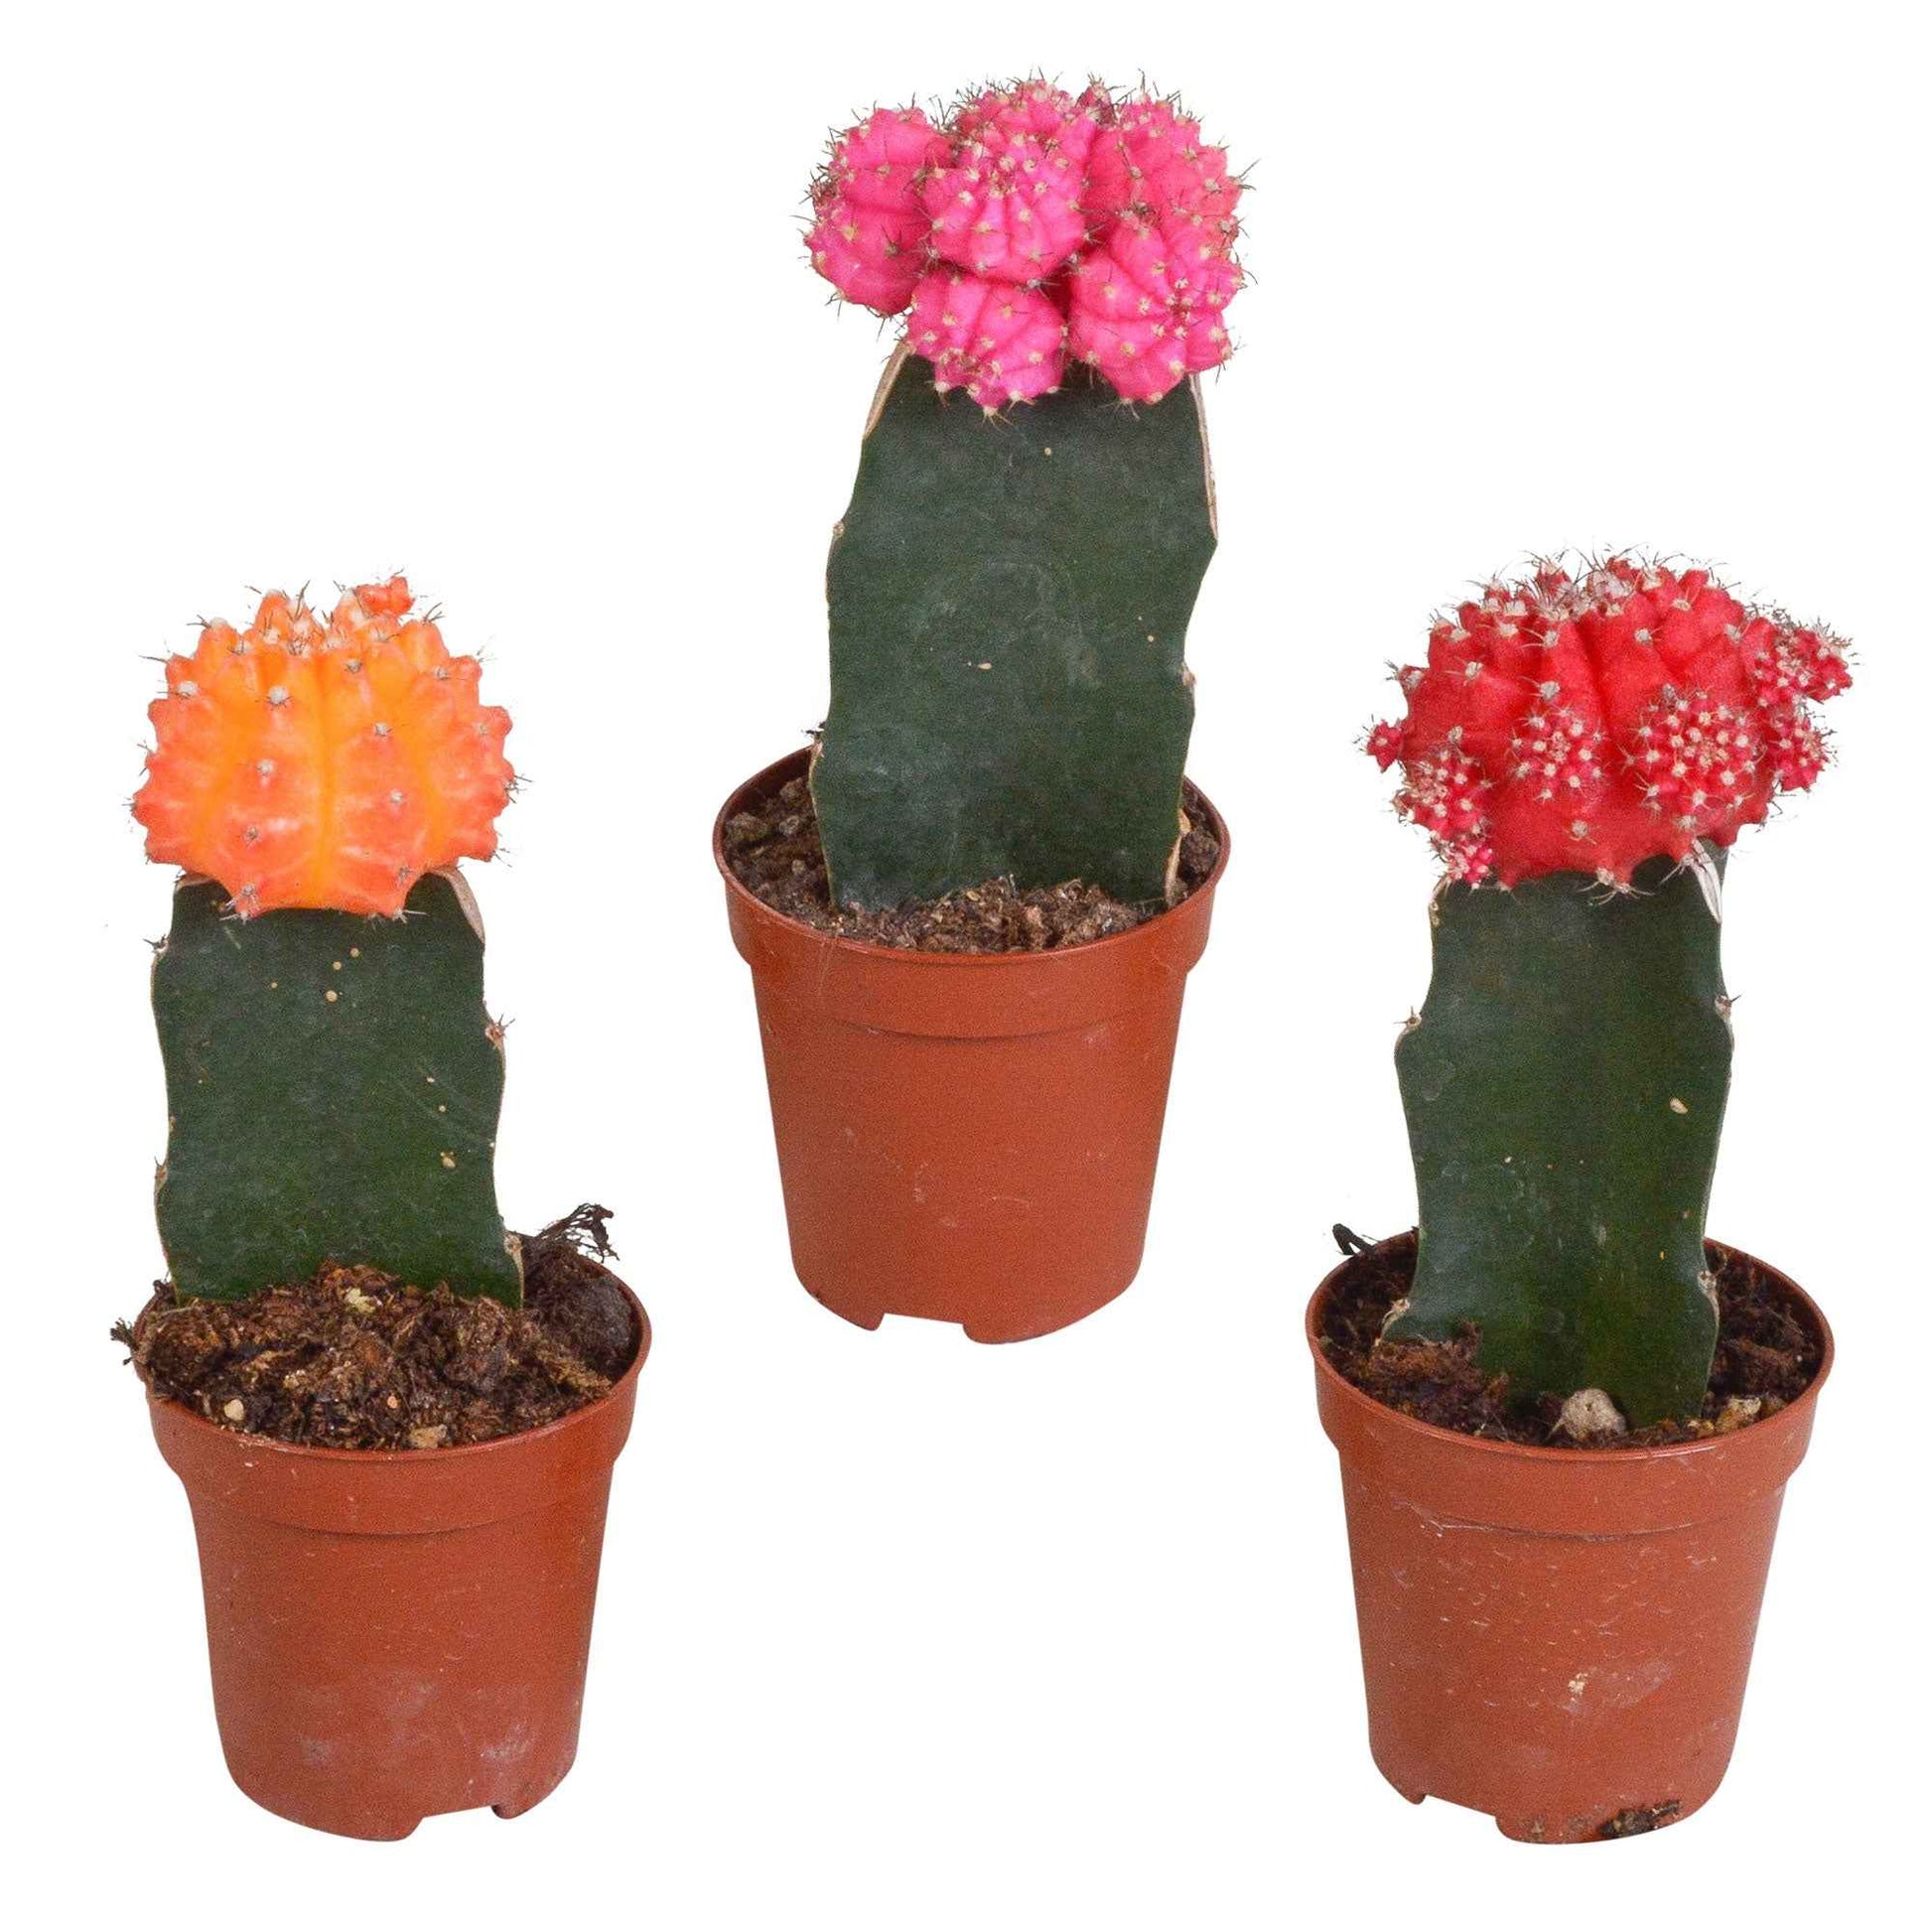 3 Cactus Gymnocalycium mihanovichii Rouge-Orangé-Rose - 3x hauteur de livraison 13-15 cm, pot de Diamètre 6 cm - Cactus - undefined